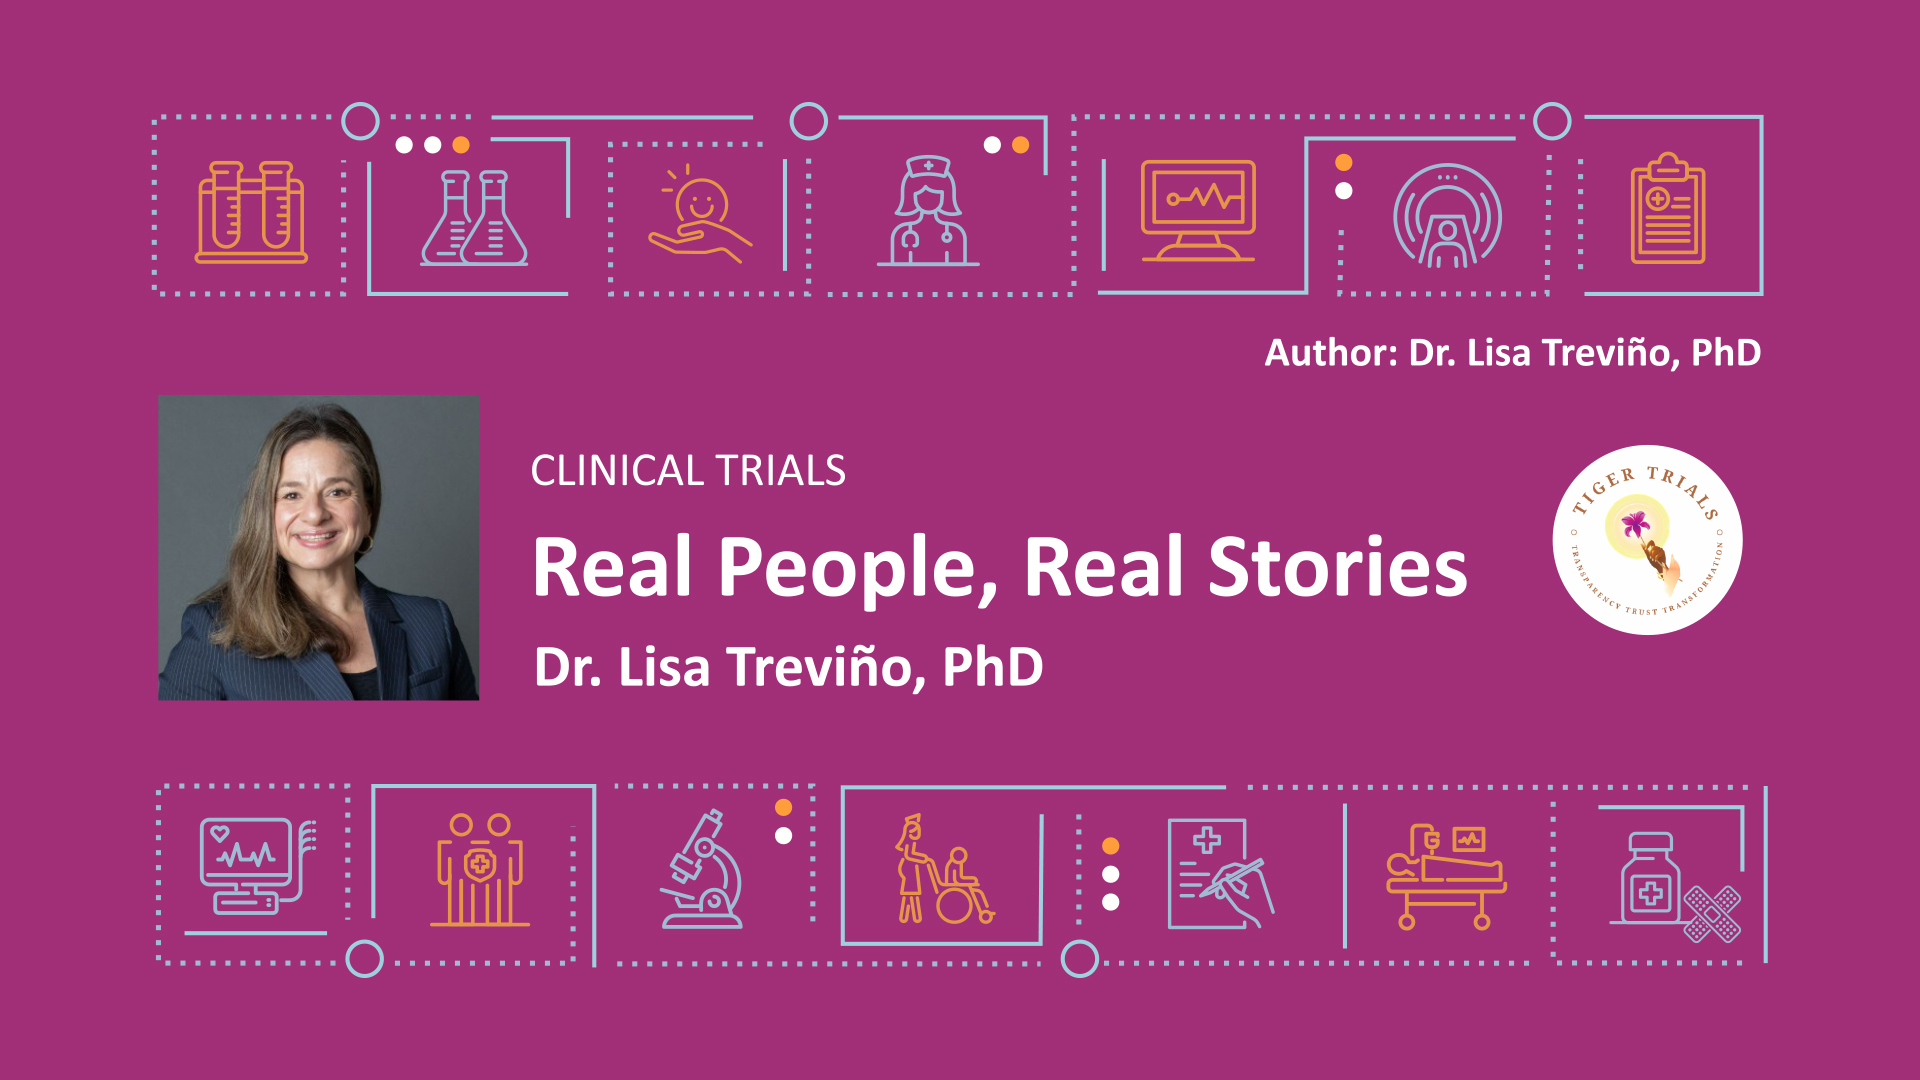 2260151-Clinical trials web graphics - Lisa Trevino